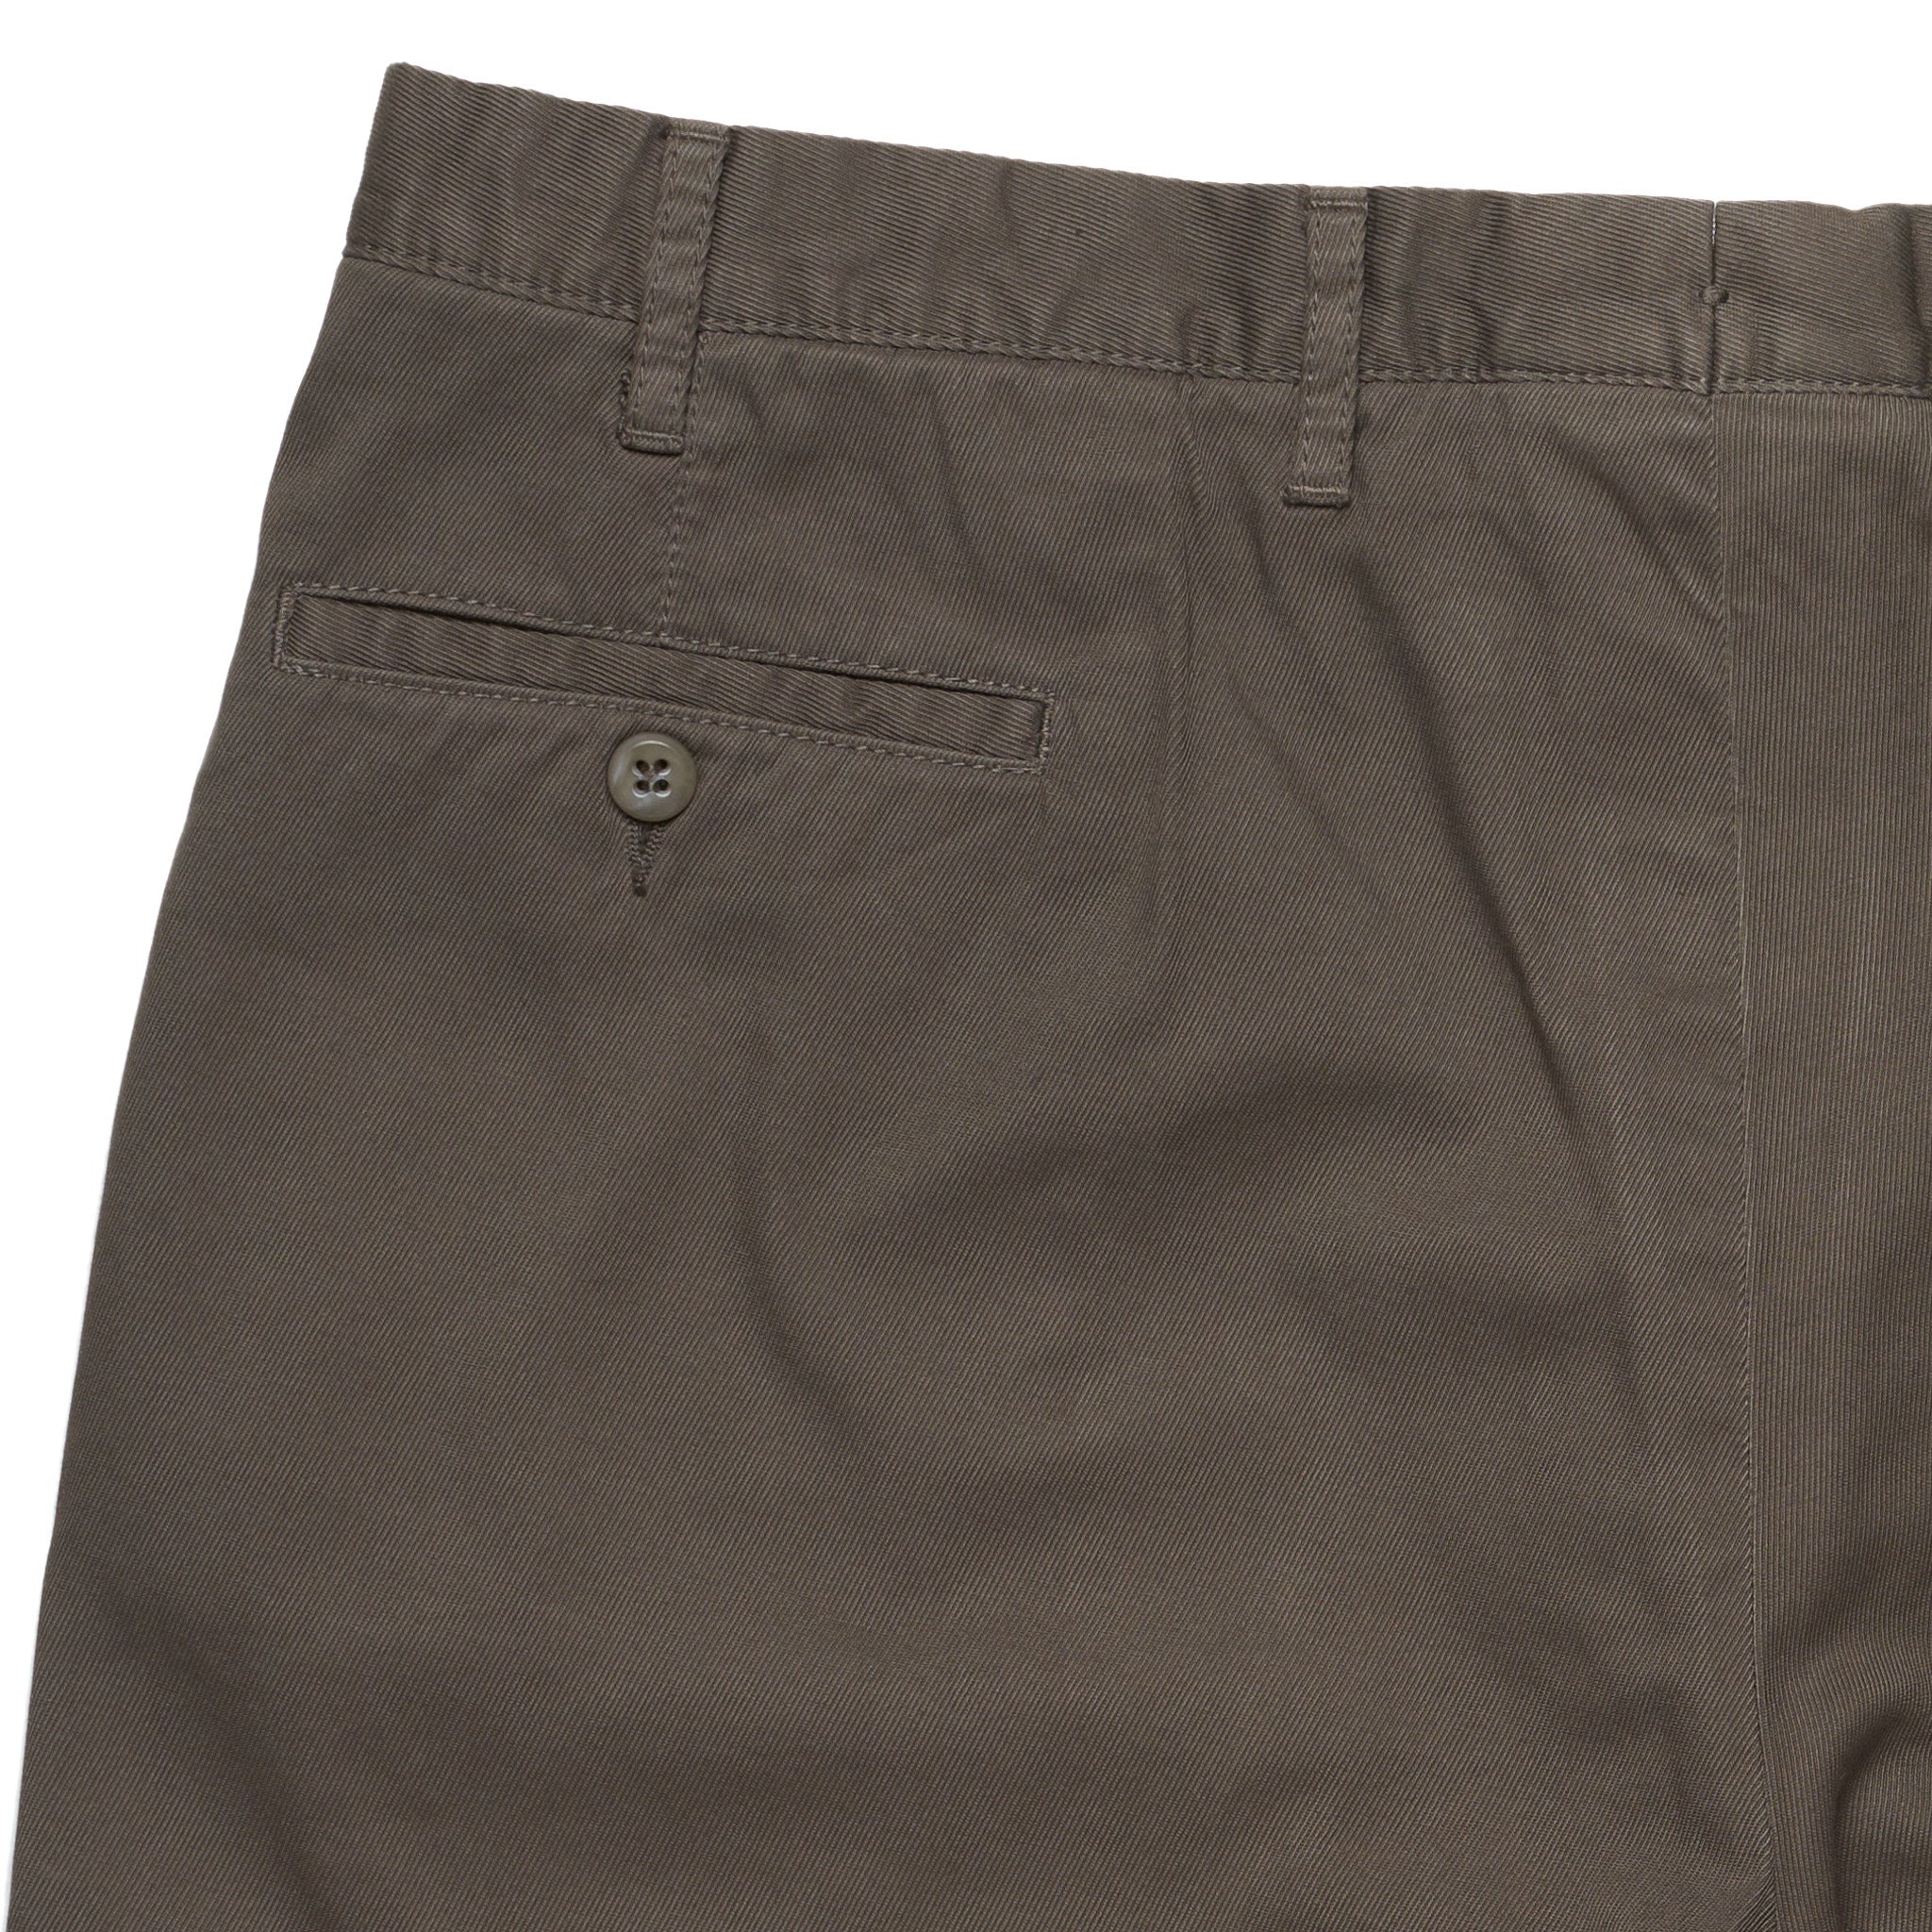 FEDELI "Jeans Dusty System" Charcoal Gray Cotton Twill Bermuda Shorts 56 NEW 40 FEDELI